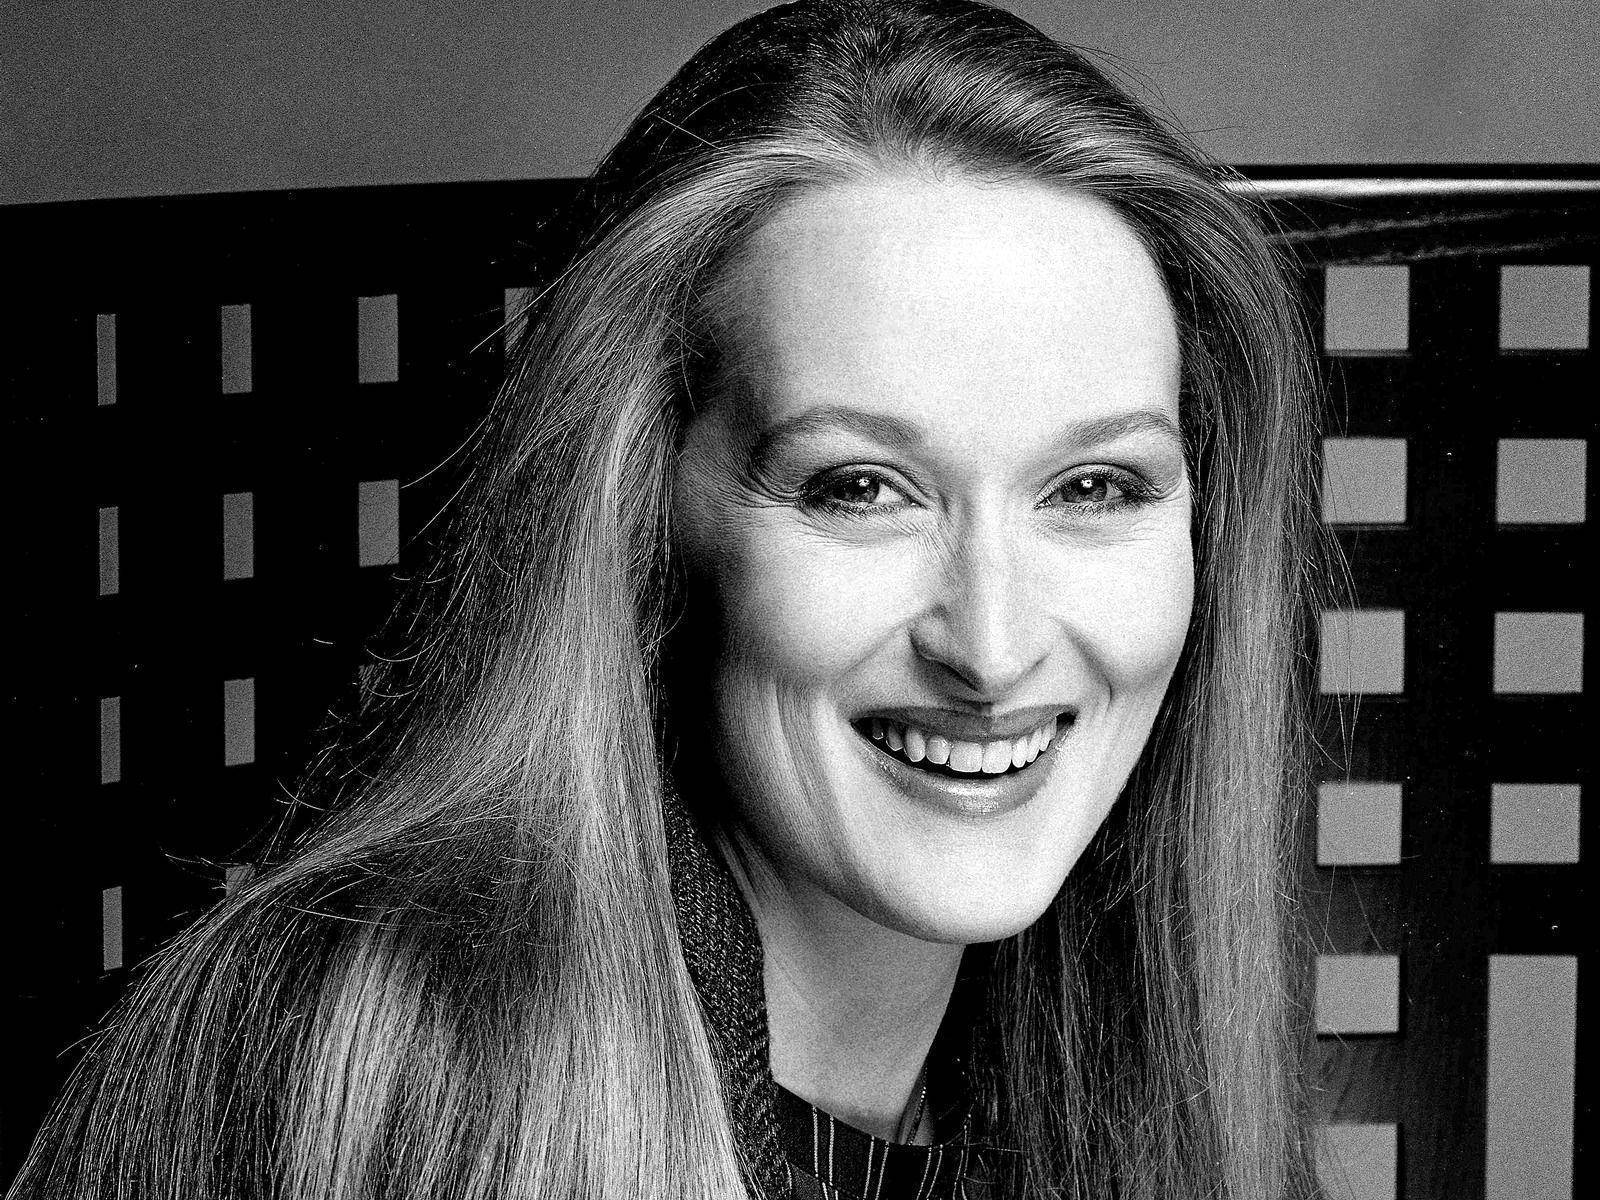 Old Image Of Actress Meryl Streep Background